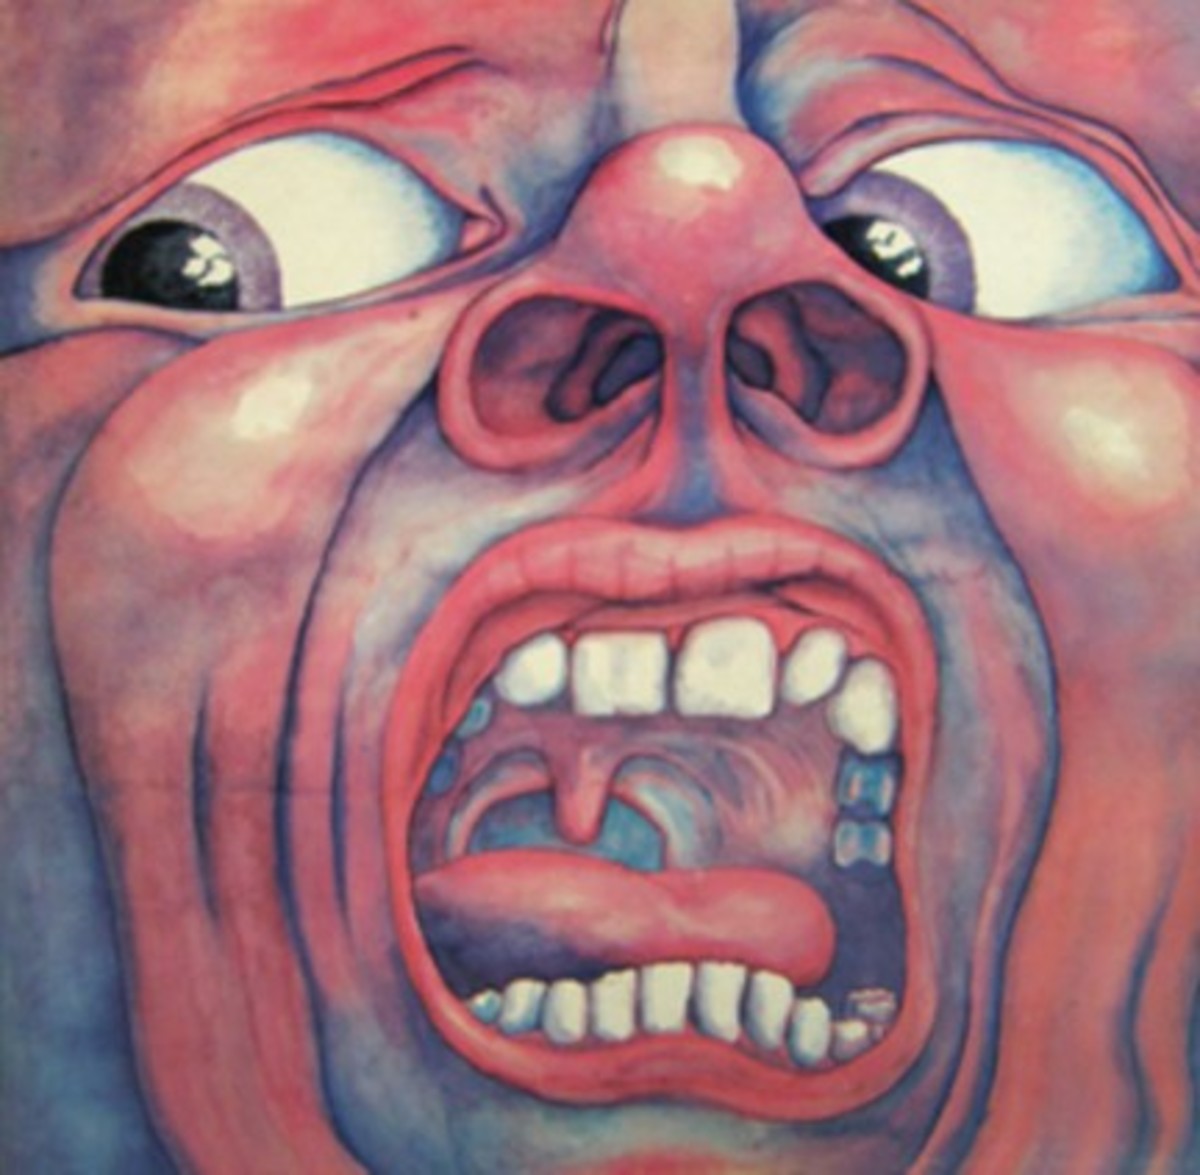 King Crimson’s 1969 debut album “In The Court of the Crimson King”